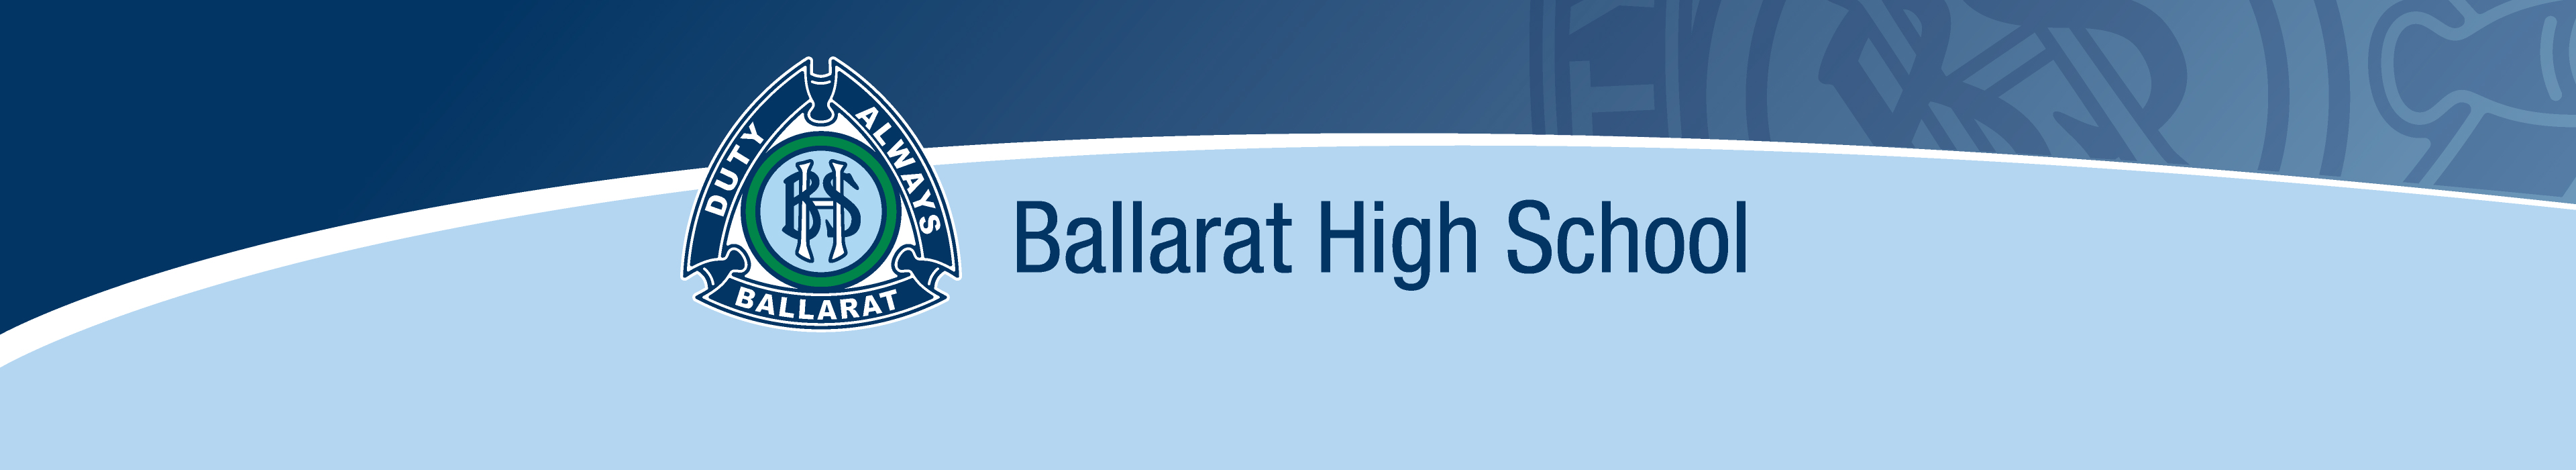 Sports at Ballarat High School